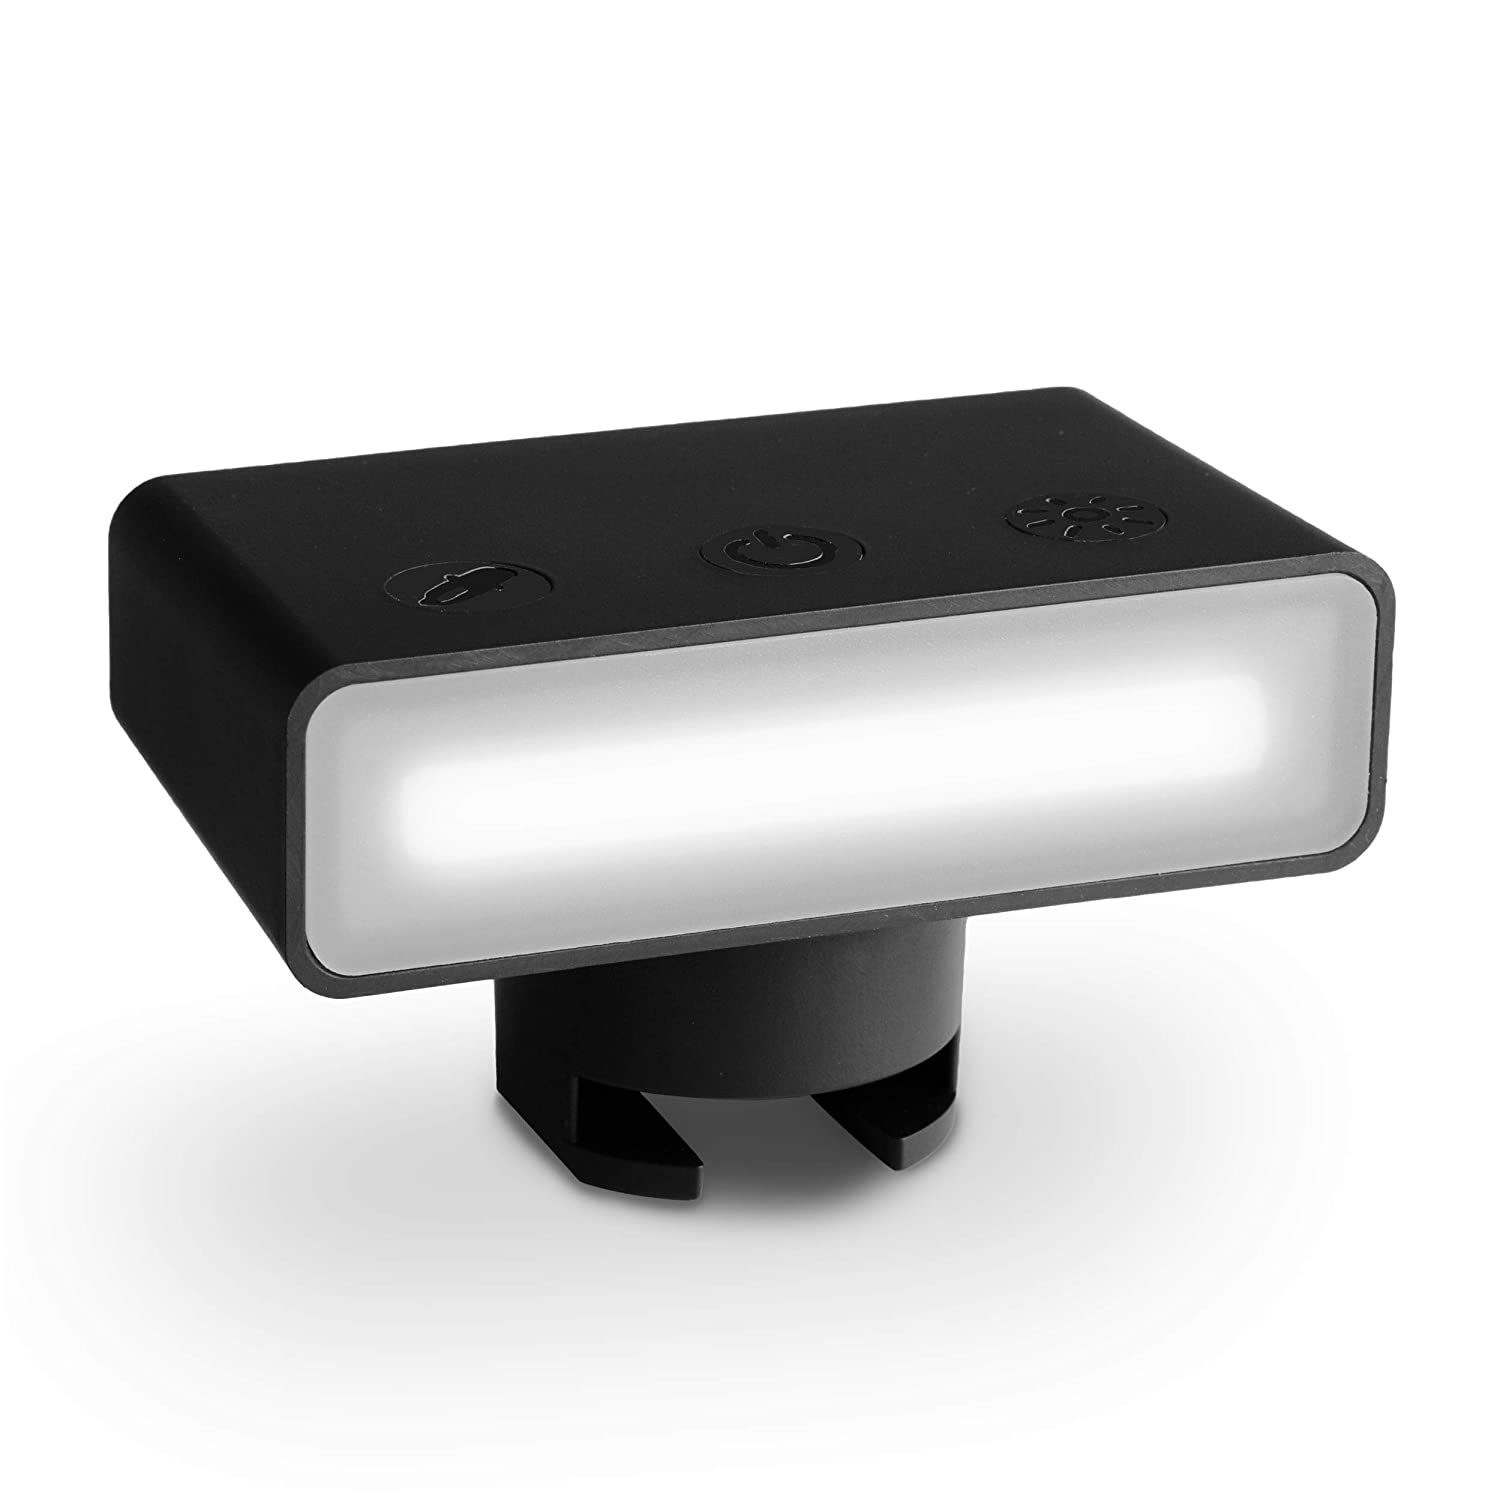 ABC Design Light - Flexible Pram Light for All ABC Design Pushchairs - Can Light in 7 Colours - Controllable via Free WeWalk App - Colour: Black